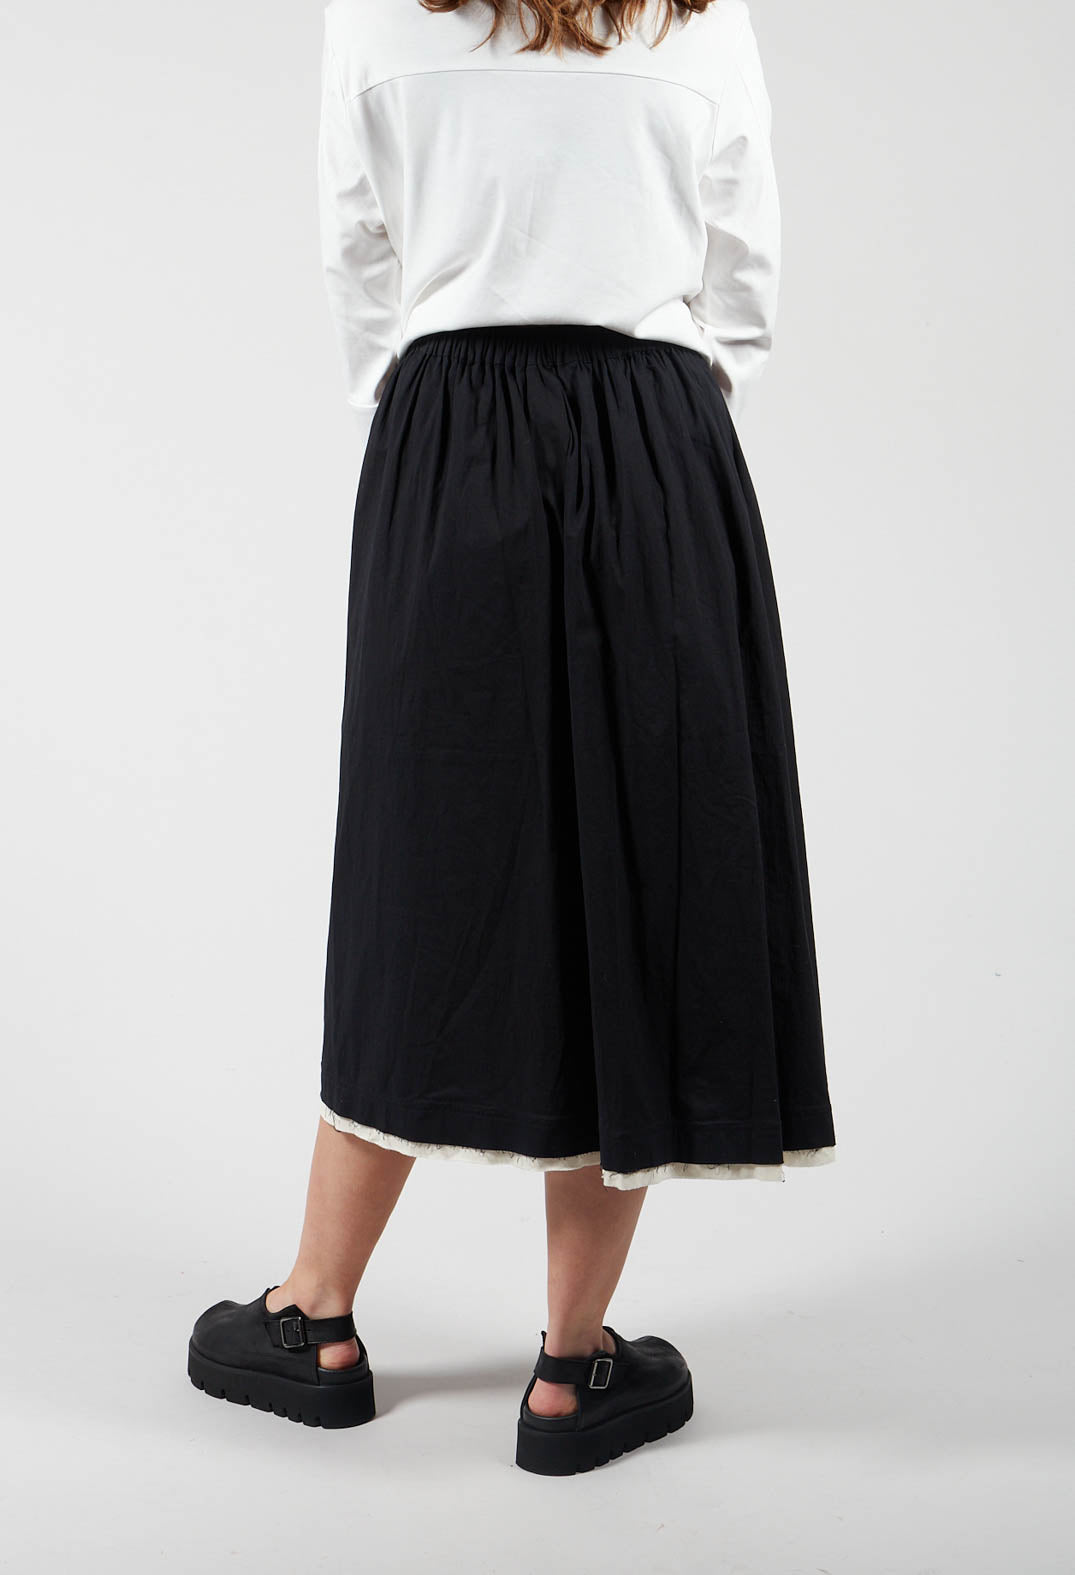 Contrast Raw Hem Skirt Trousers in Black / White